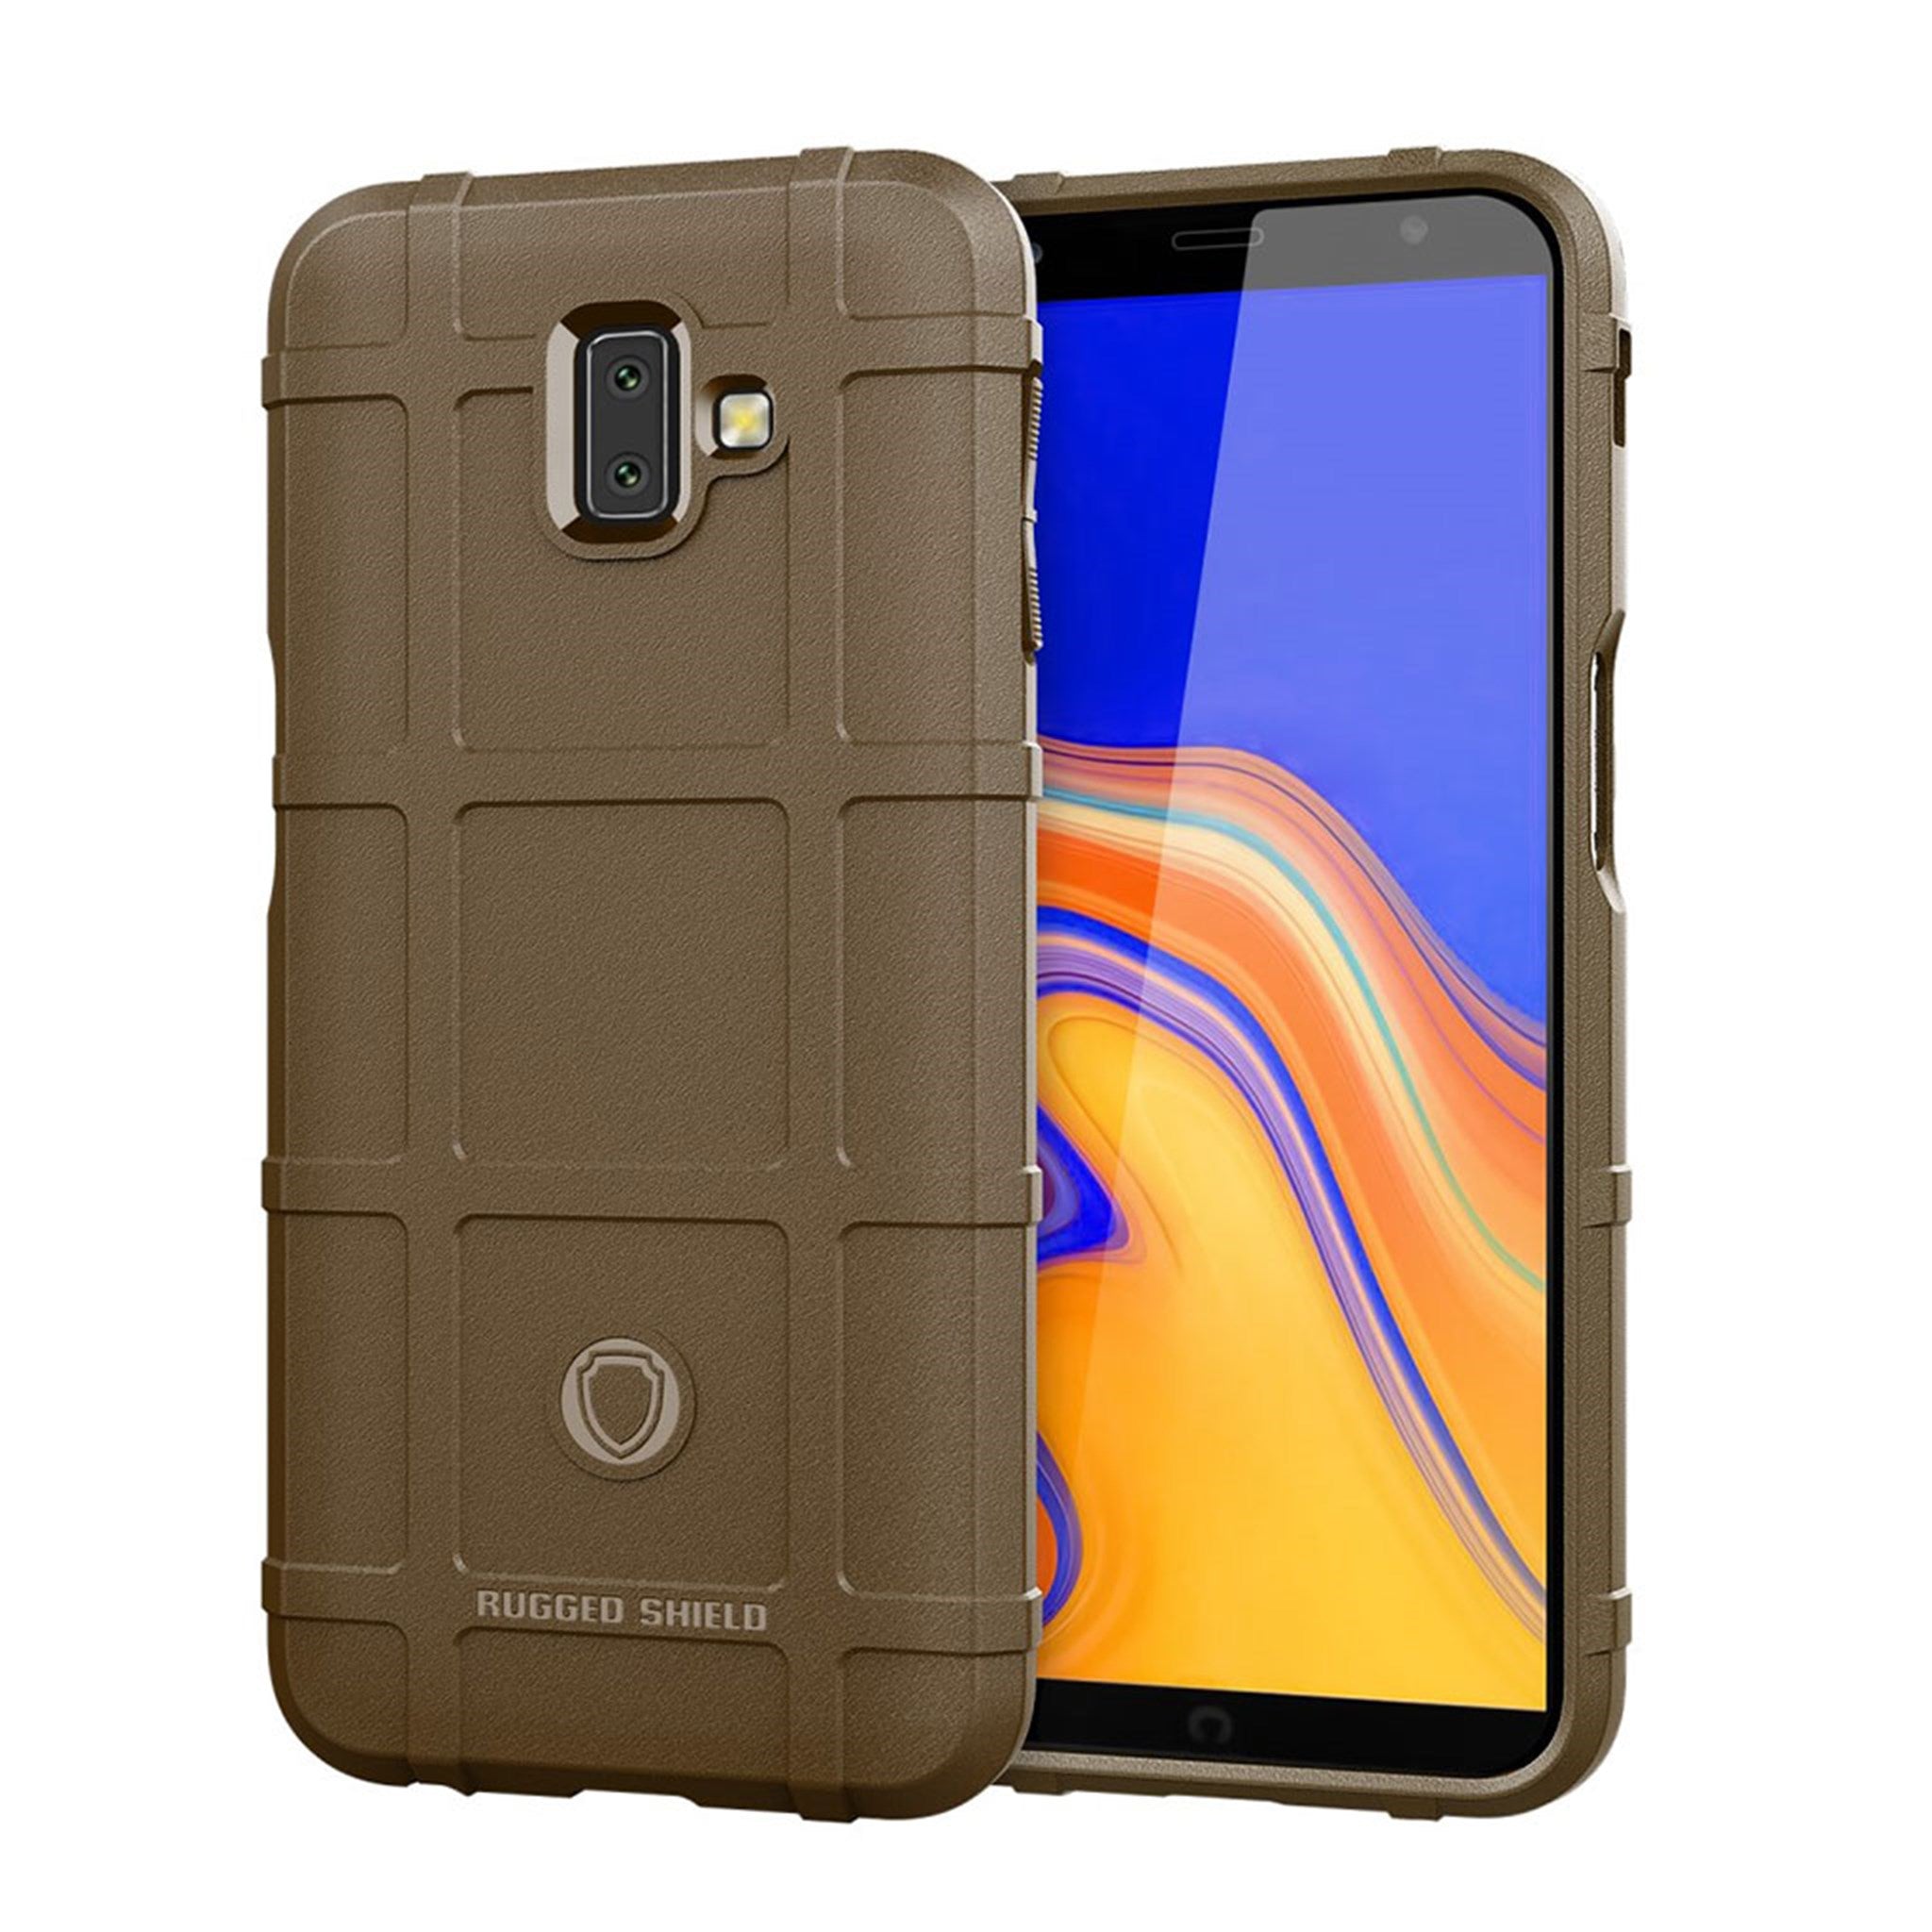 Samsung Galaxy J6 Plus (2018) anti-shock grid texture soft case - Brown